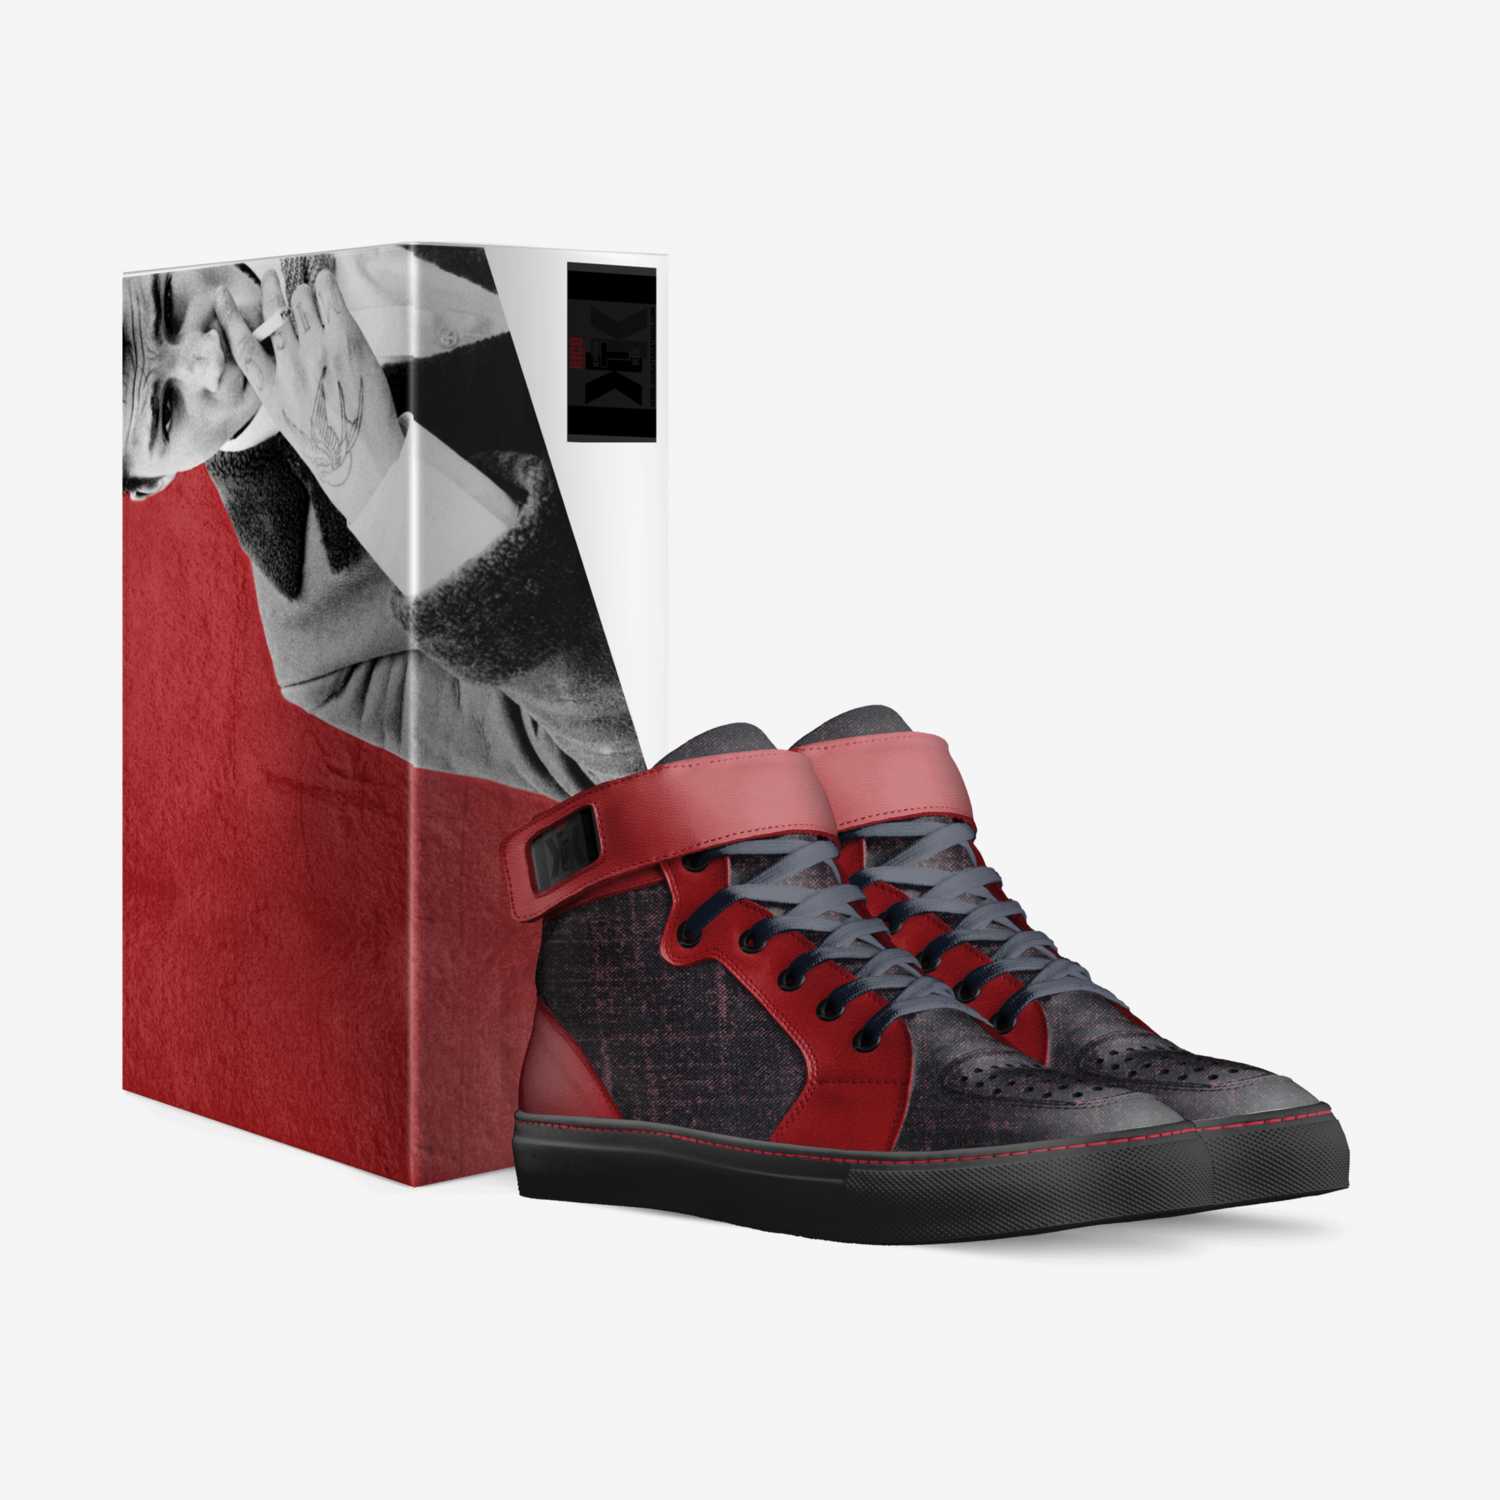 RICO custom made in Italy shoes by Kinka T Kix | Box view